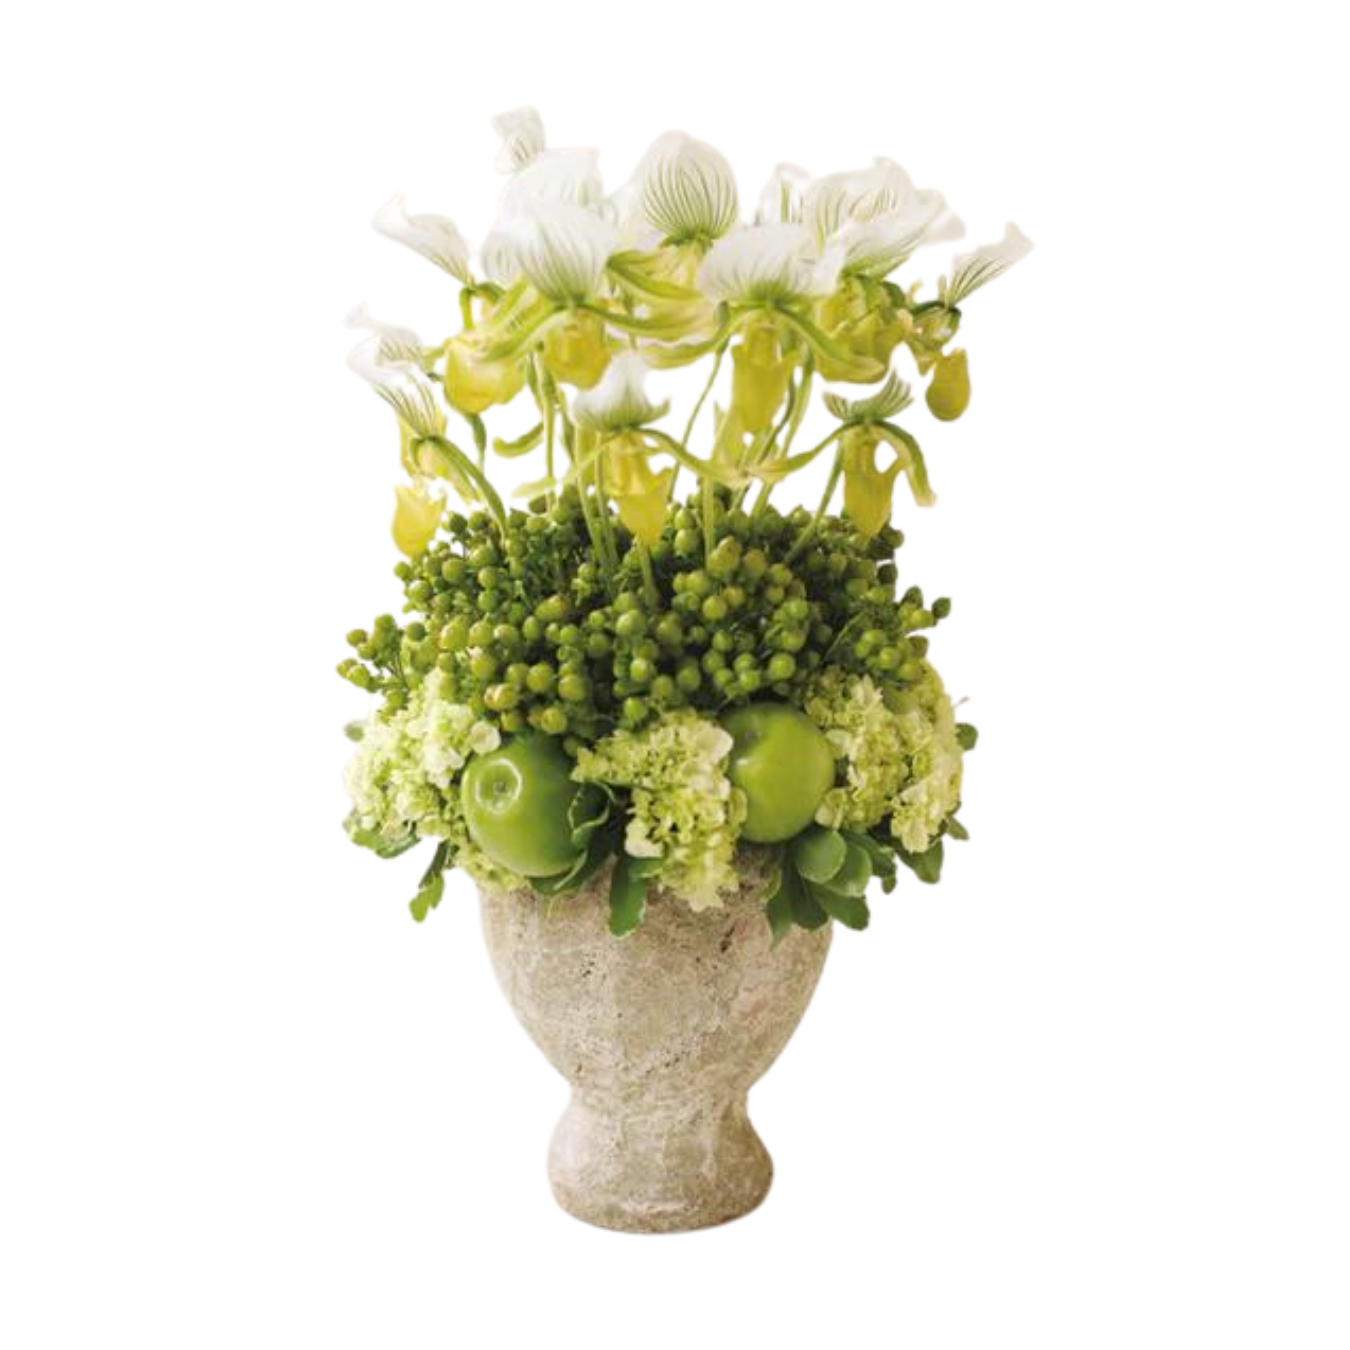 Angelica – Flores Mantilla: Floral Design & Gifts